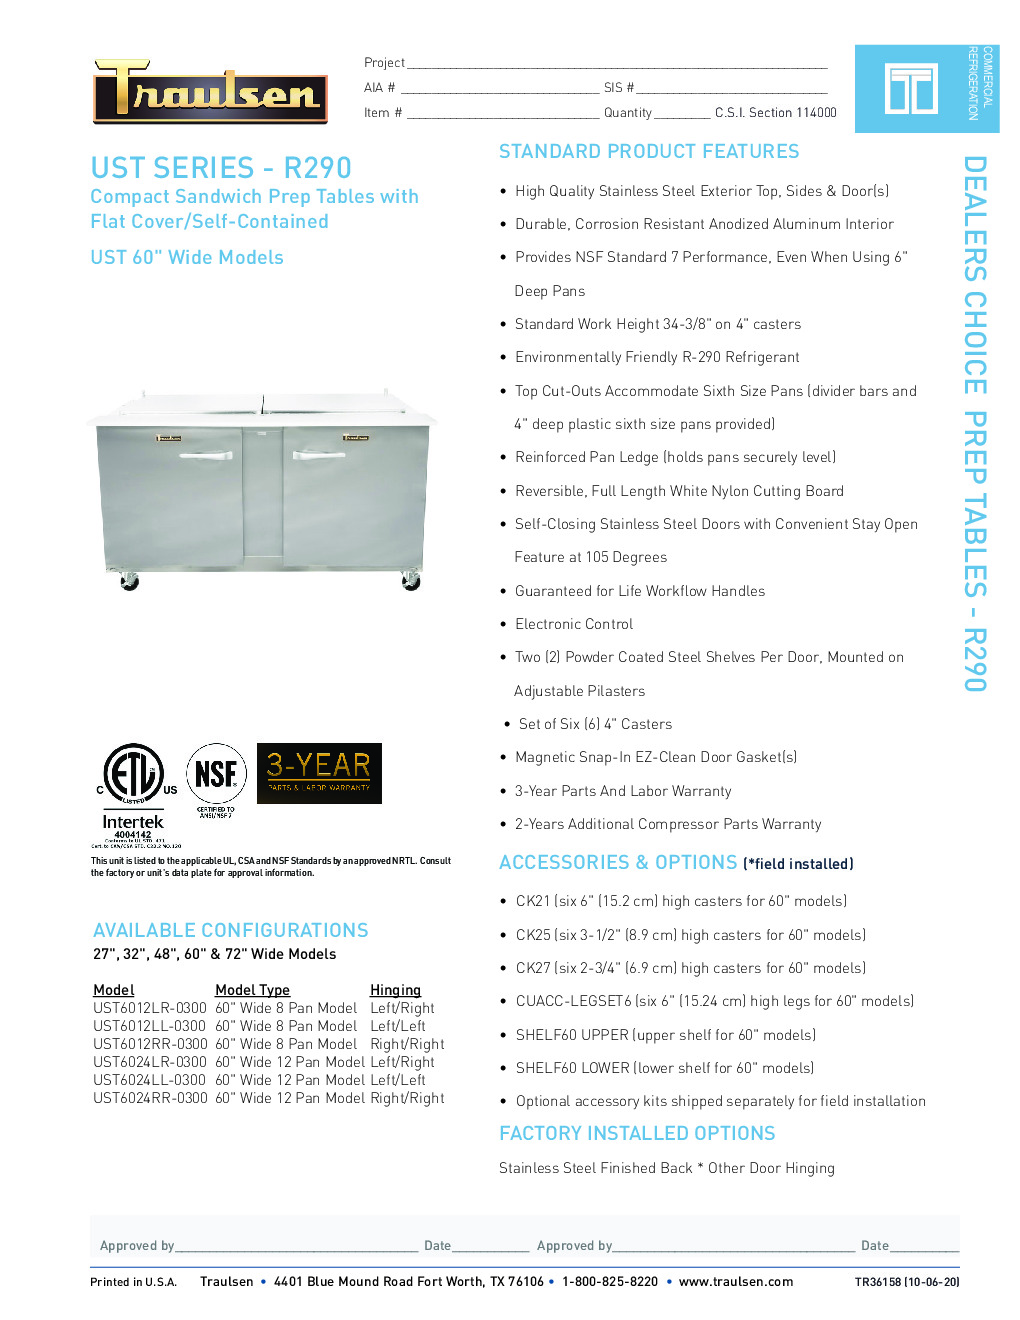 Traulsen UST6024LR-0300-SB Sandwich / Salad Unit Refrigerated Counter